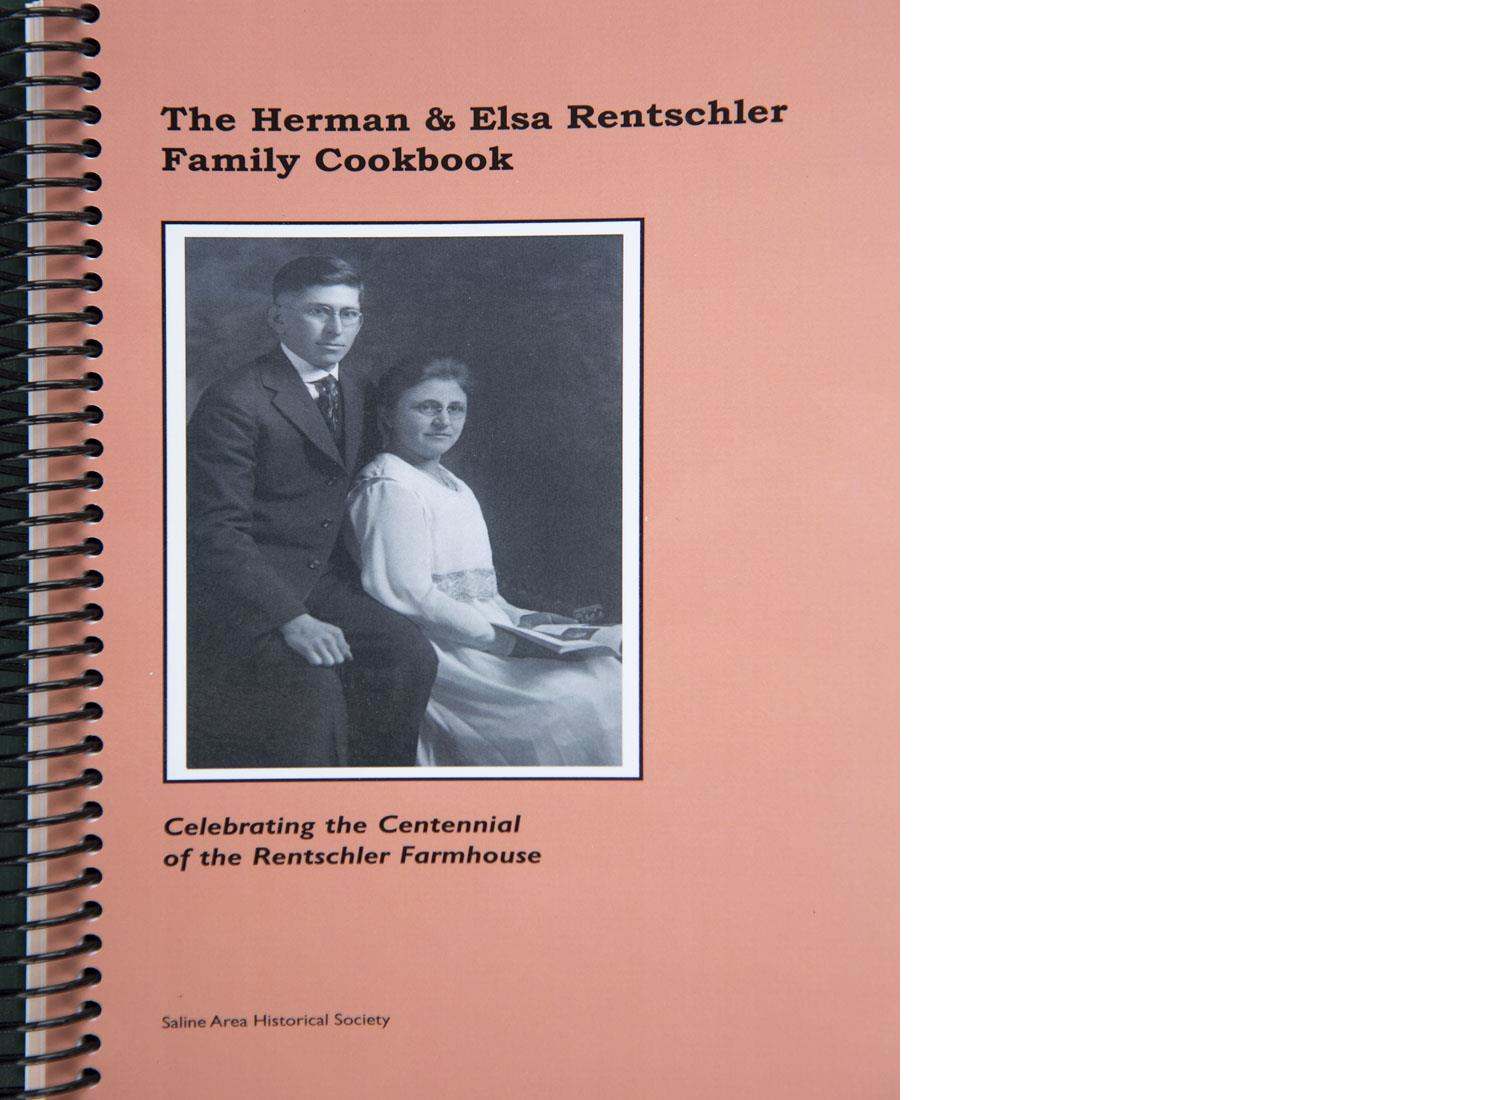 HERMAN & ELSA RENTSCHLER FAMILY COOKBOOK